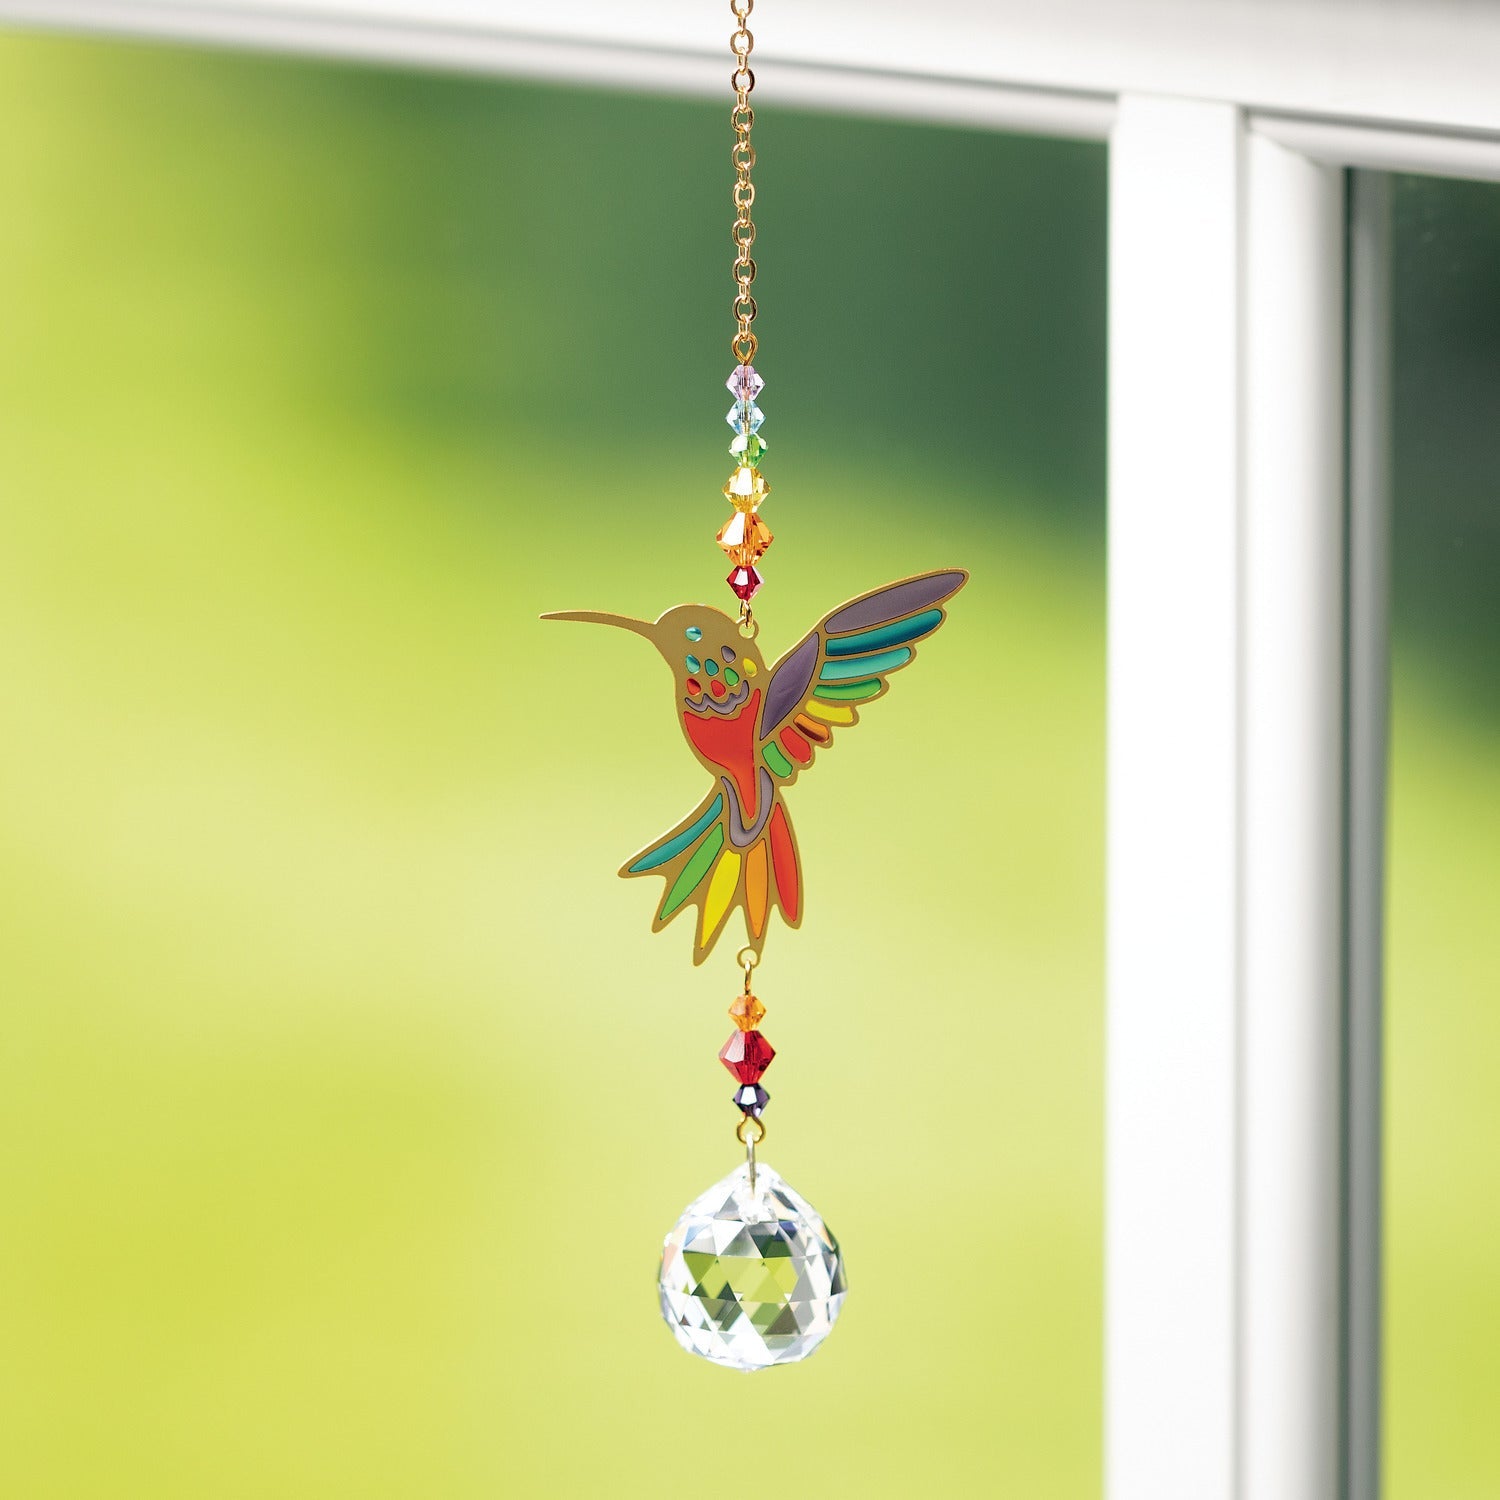 Crystal Dreams - Hummingbird